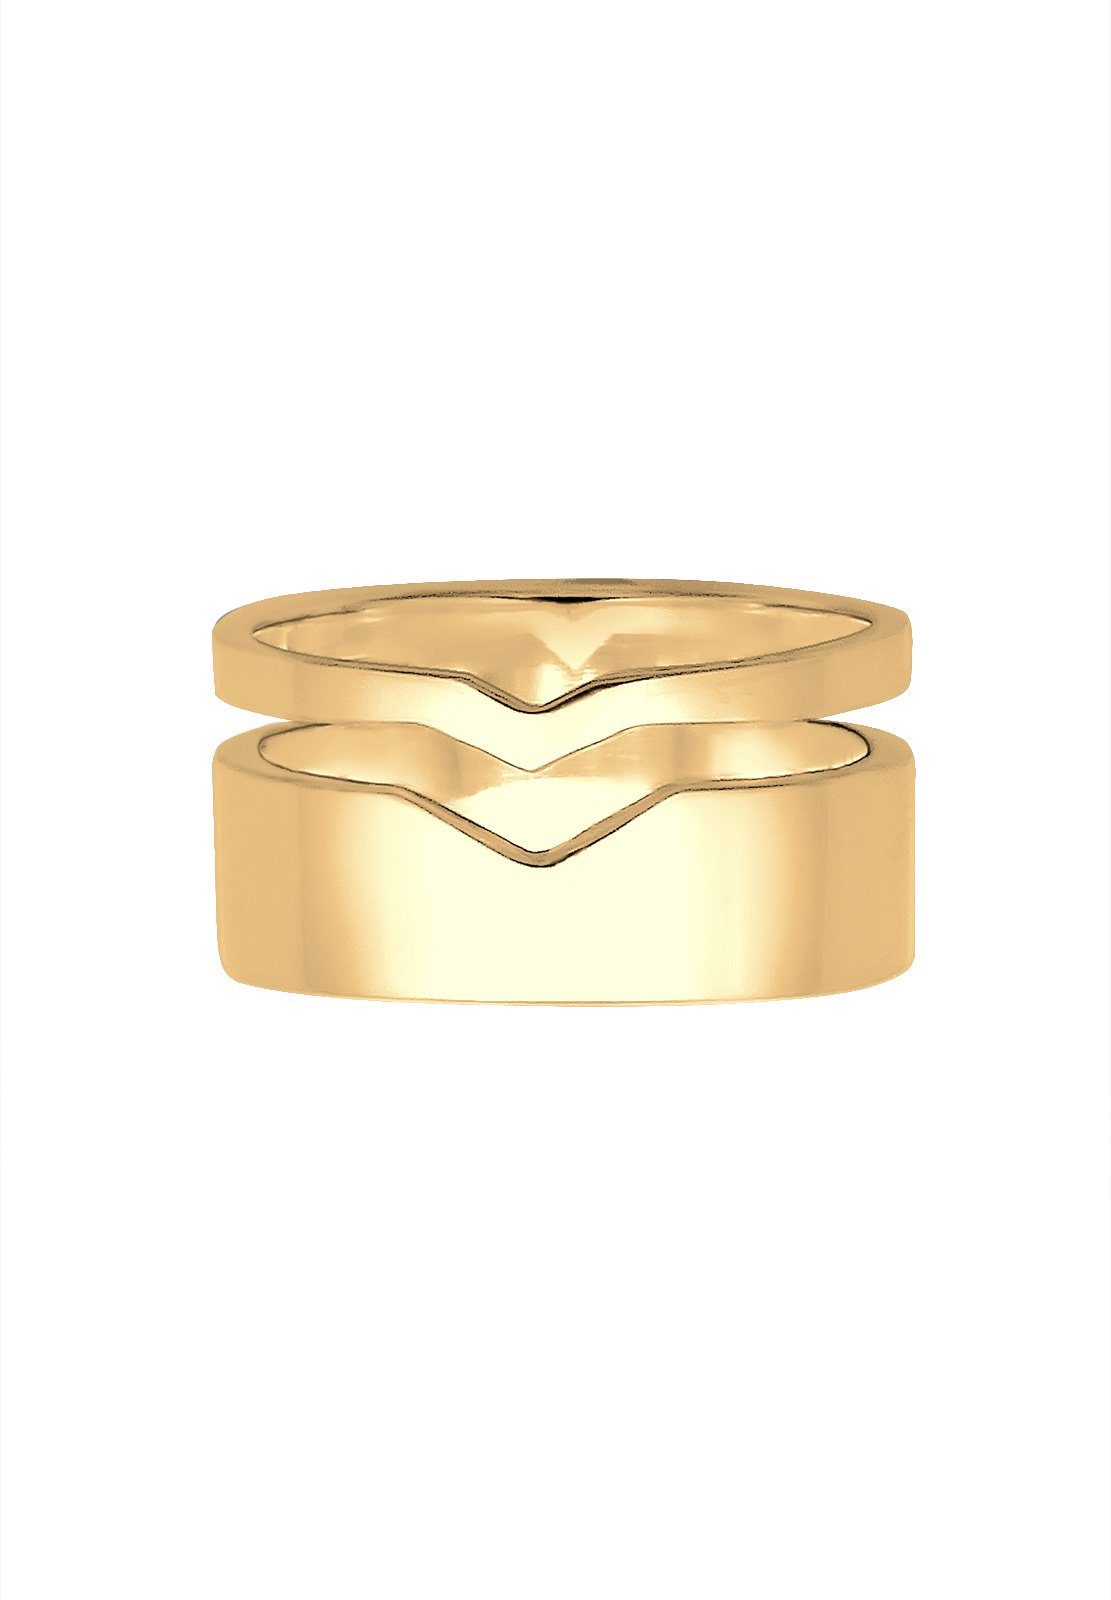 Gold Figa Silber Geo Basic 925 Cut-Out Bandring Elli Fingerring Trend